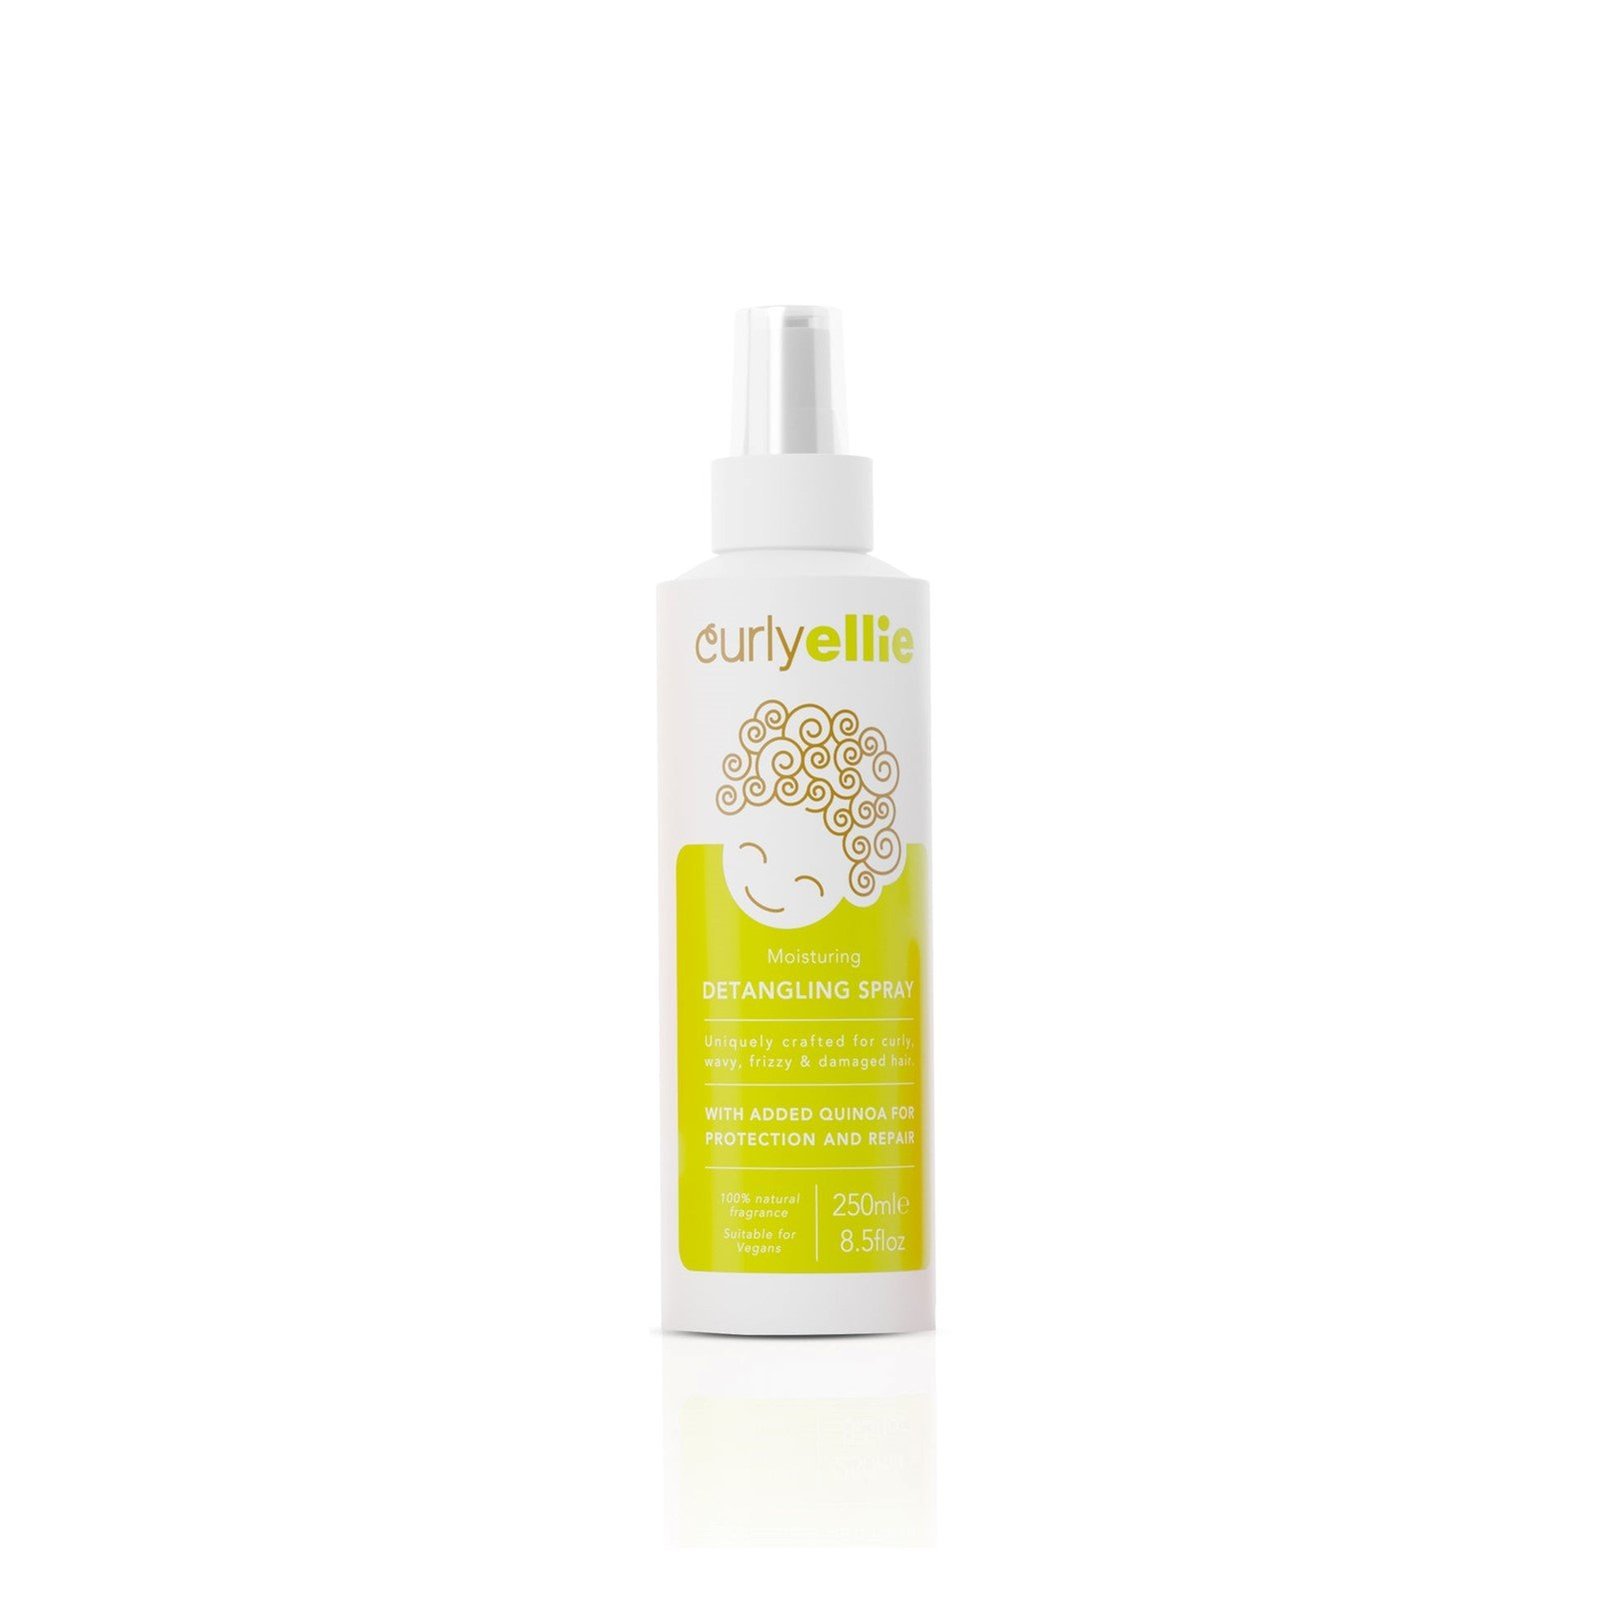 CurlyEllie Moisturising Detangling Spray 250ml (8.5 fl oz)